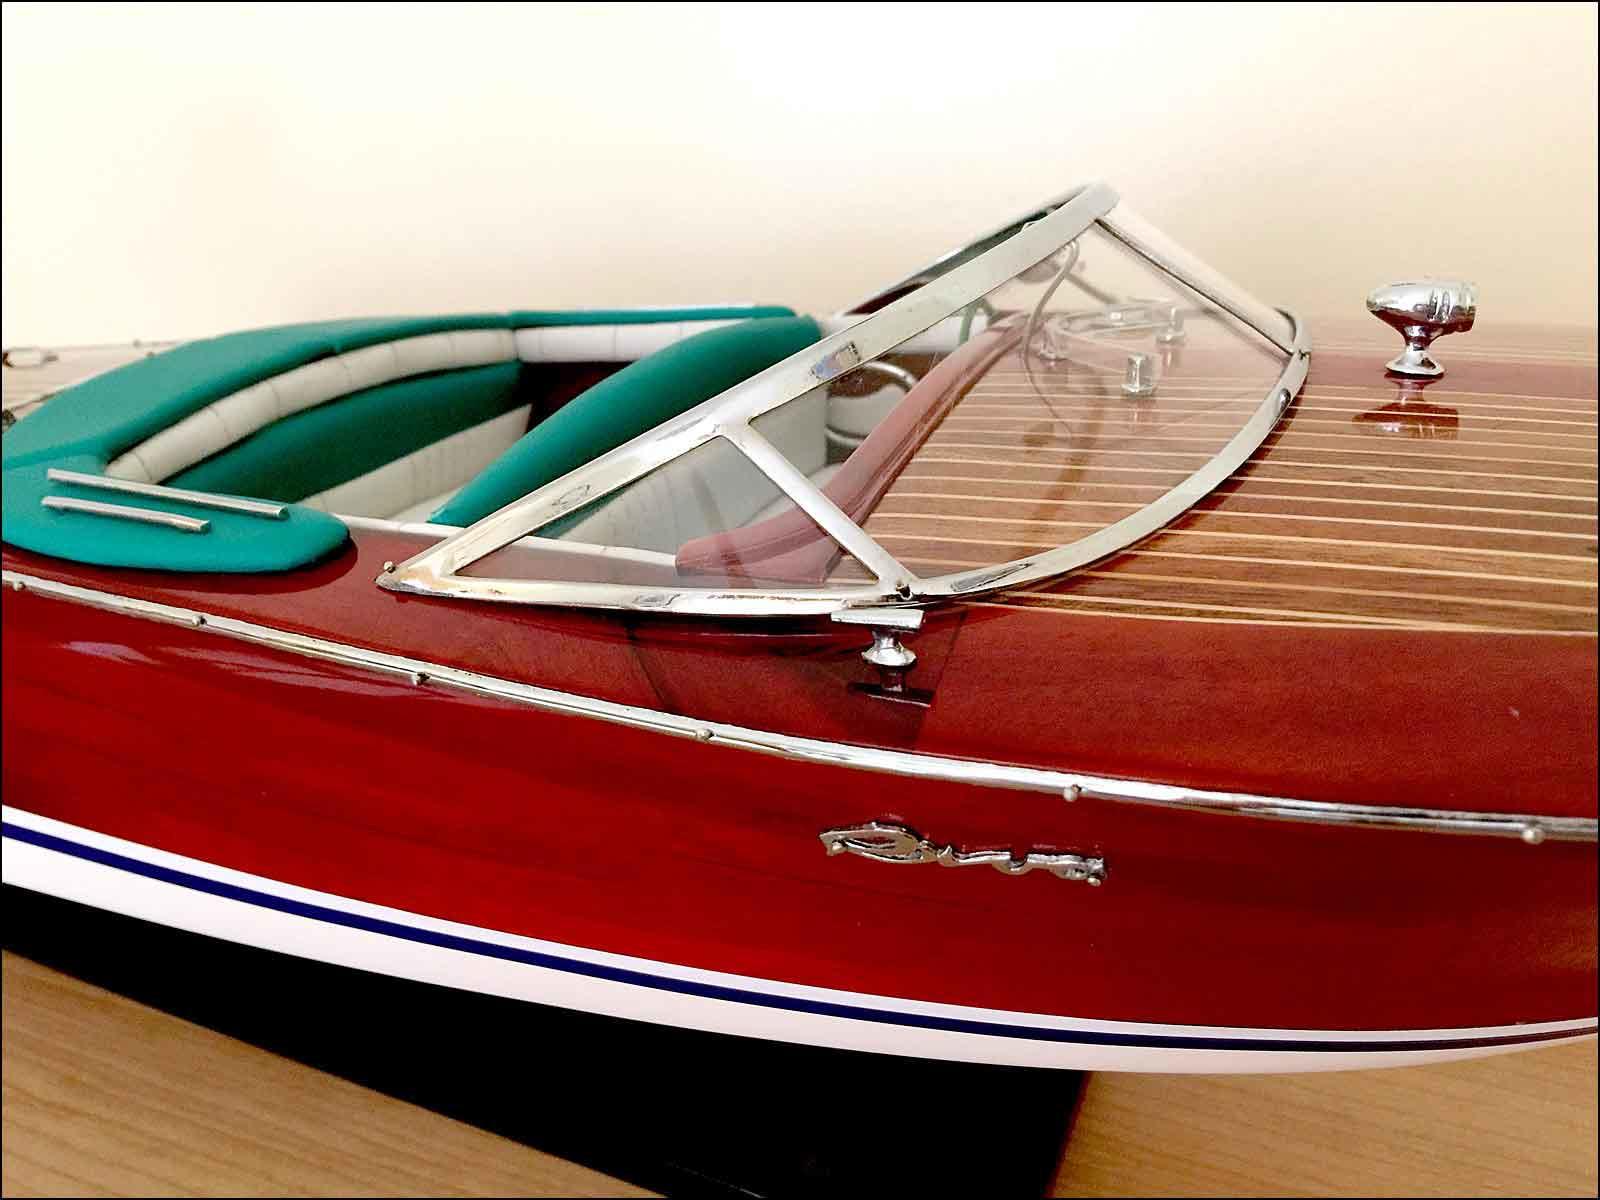 built Riva Ariston model boat